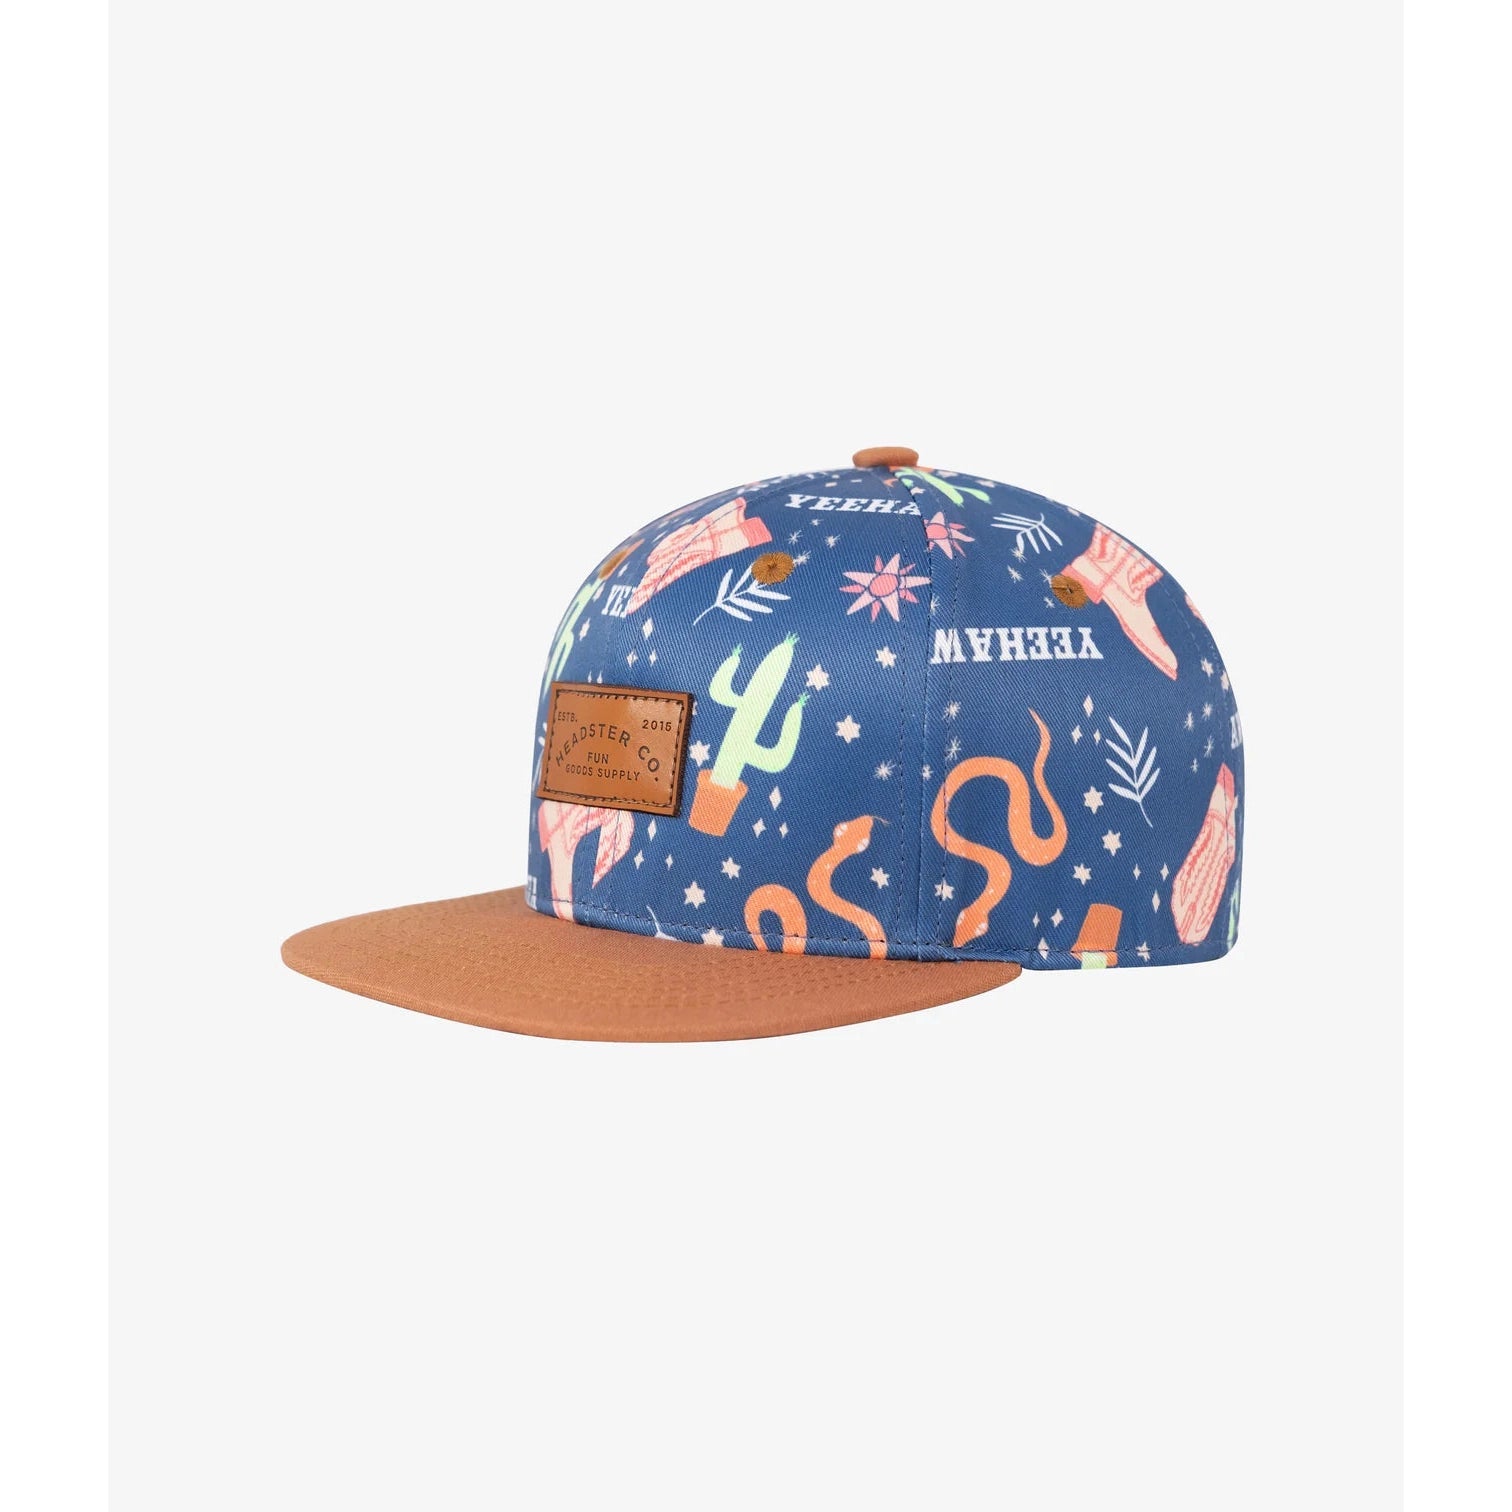 Headster Summer Hats